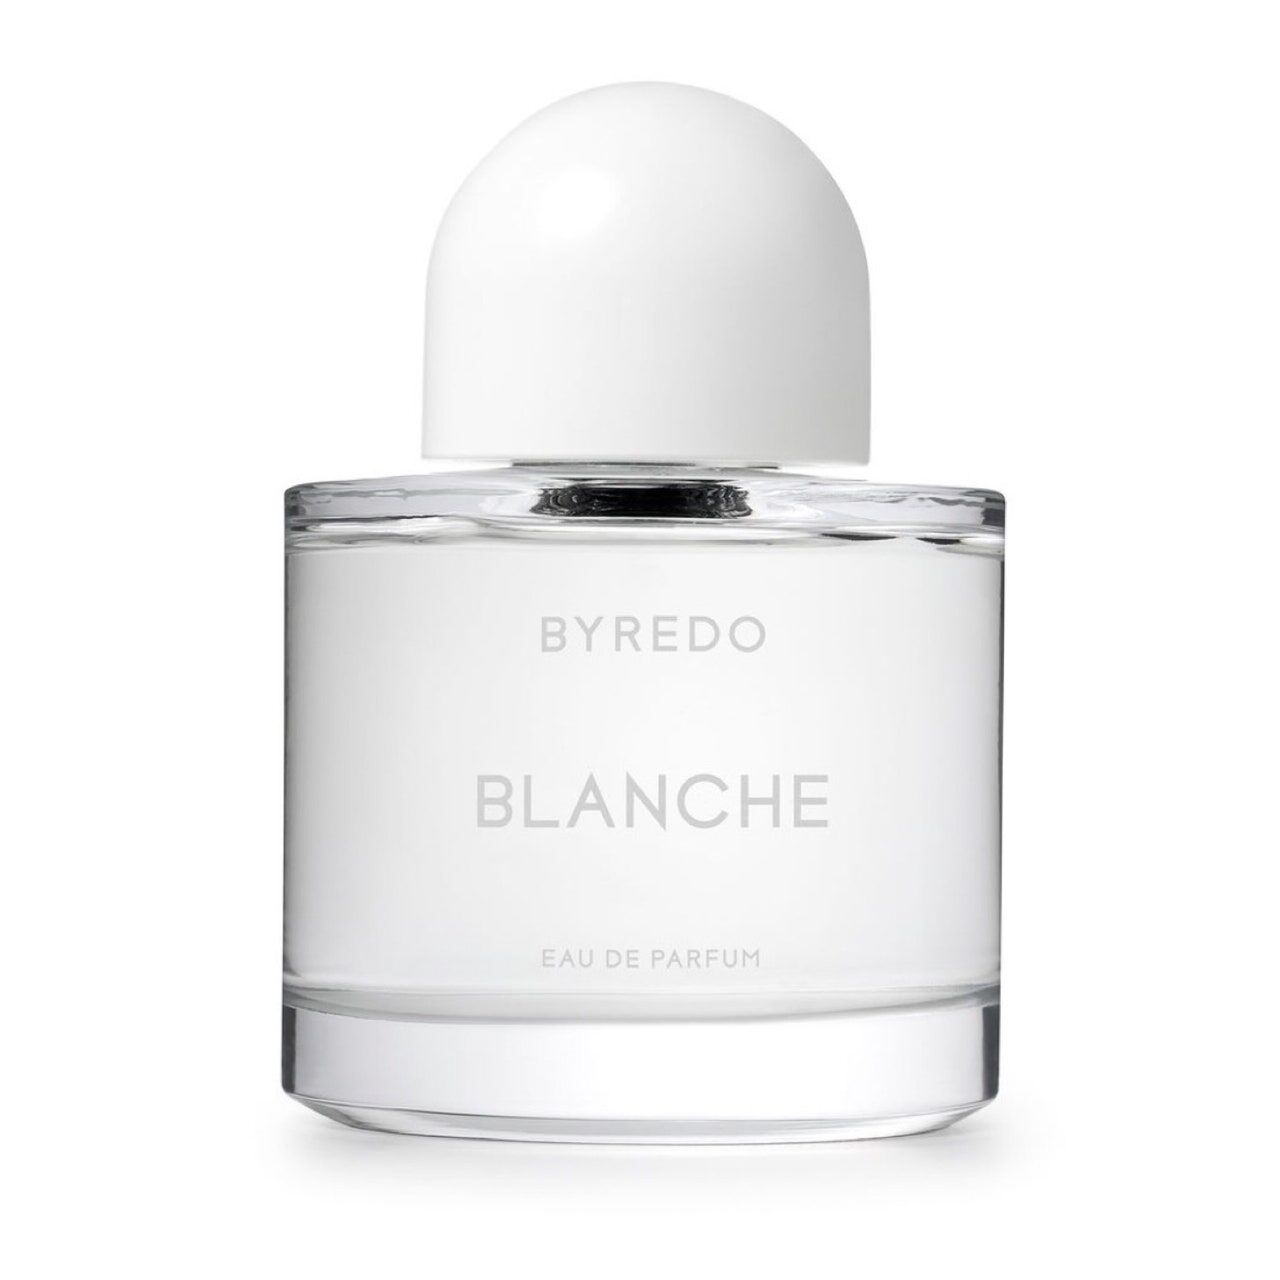 Byredo Blanche Eau de Parfum Collector's Edition